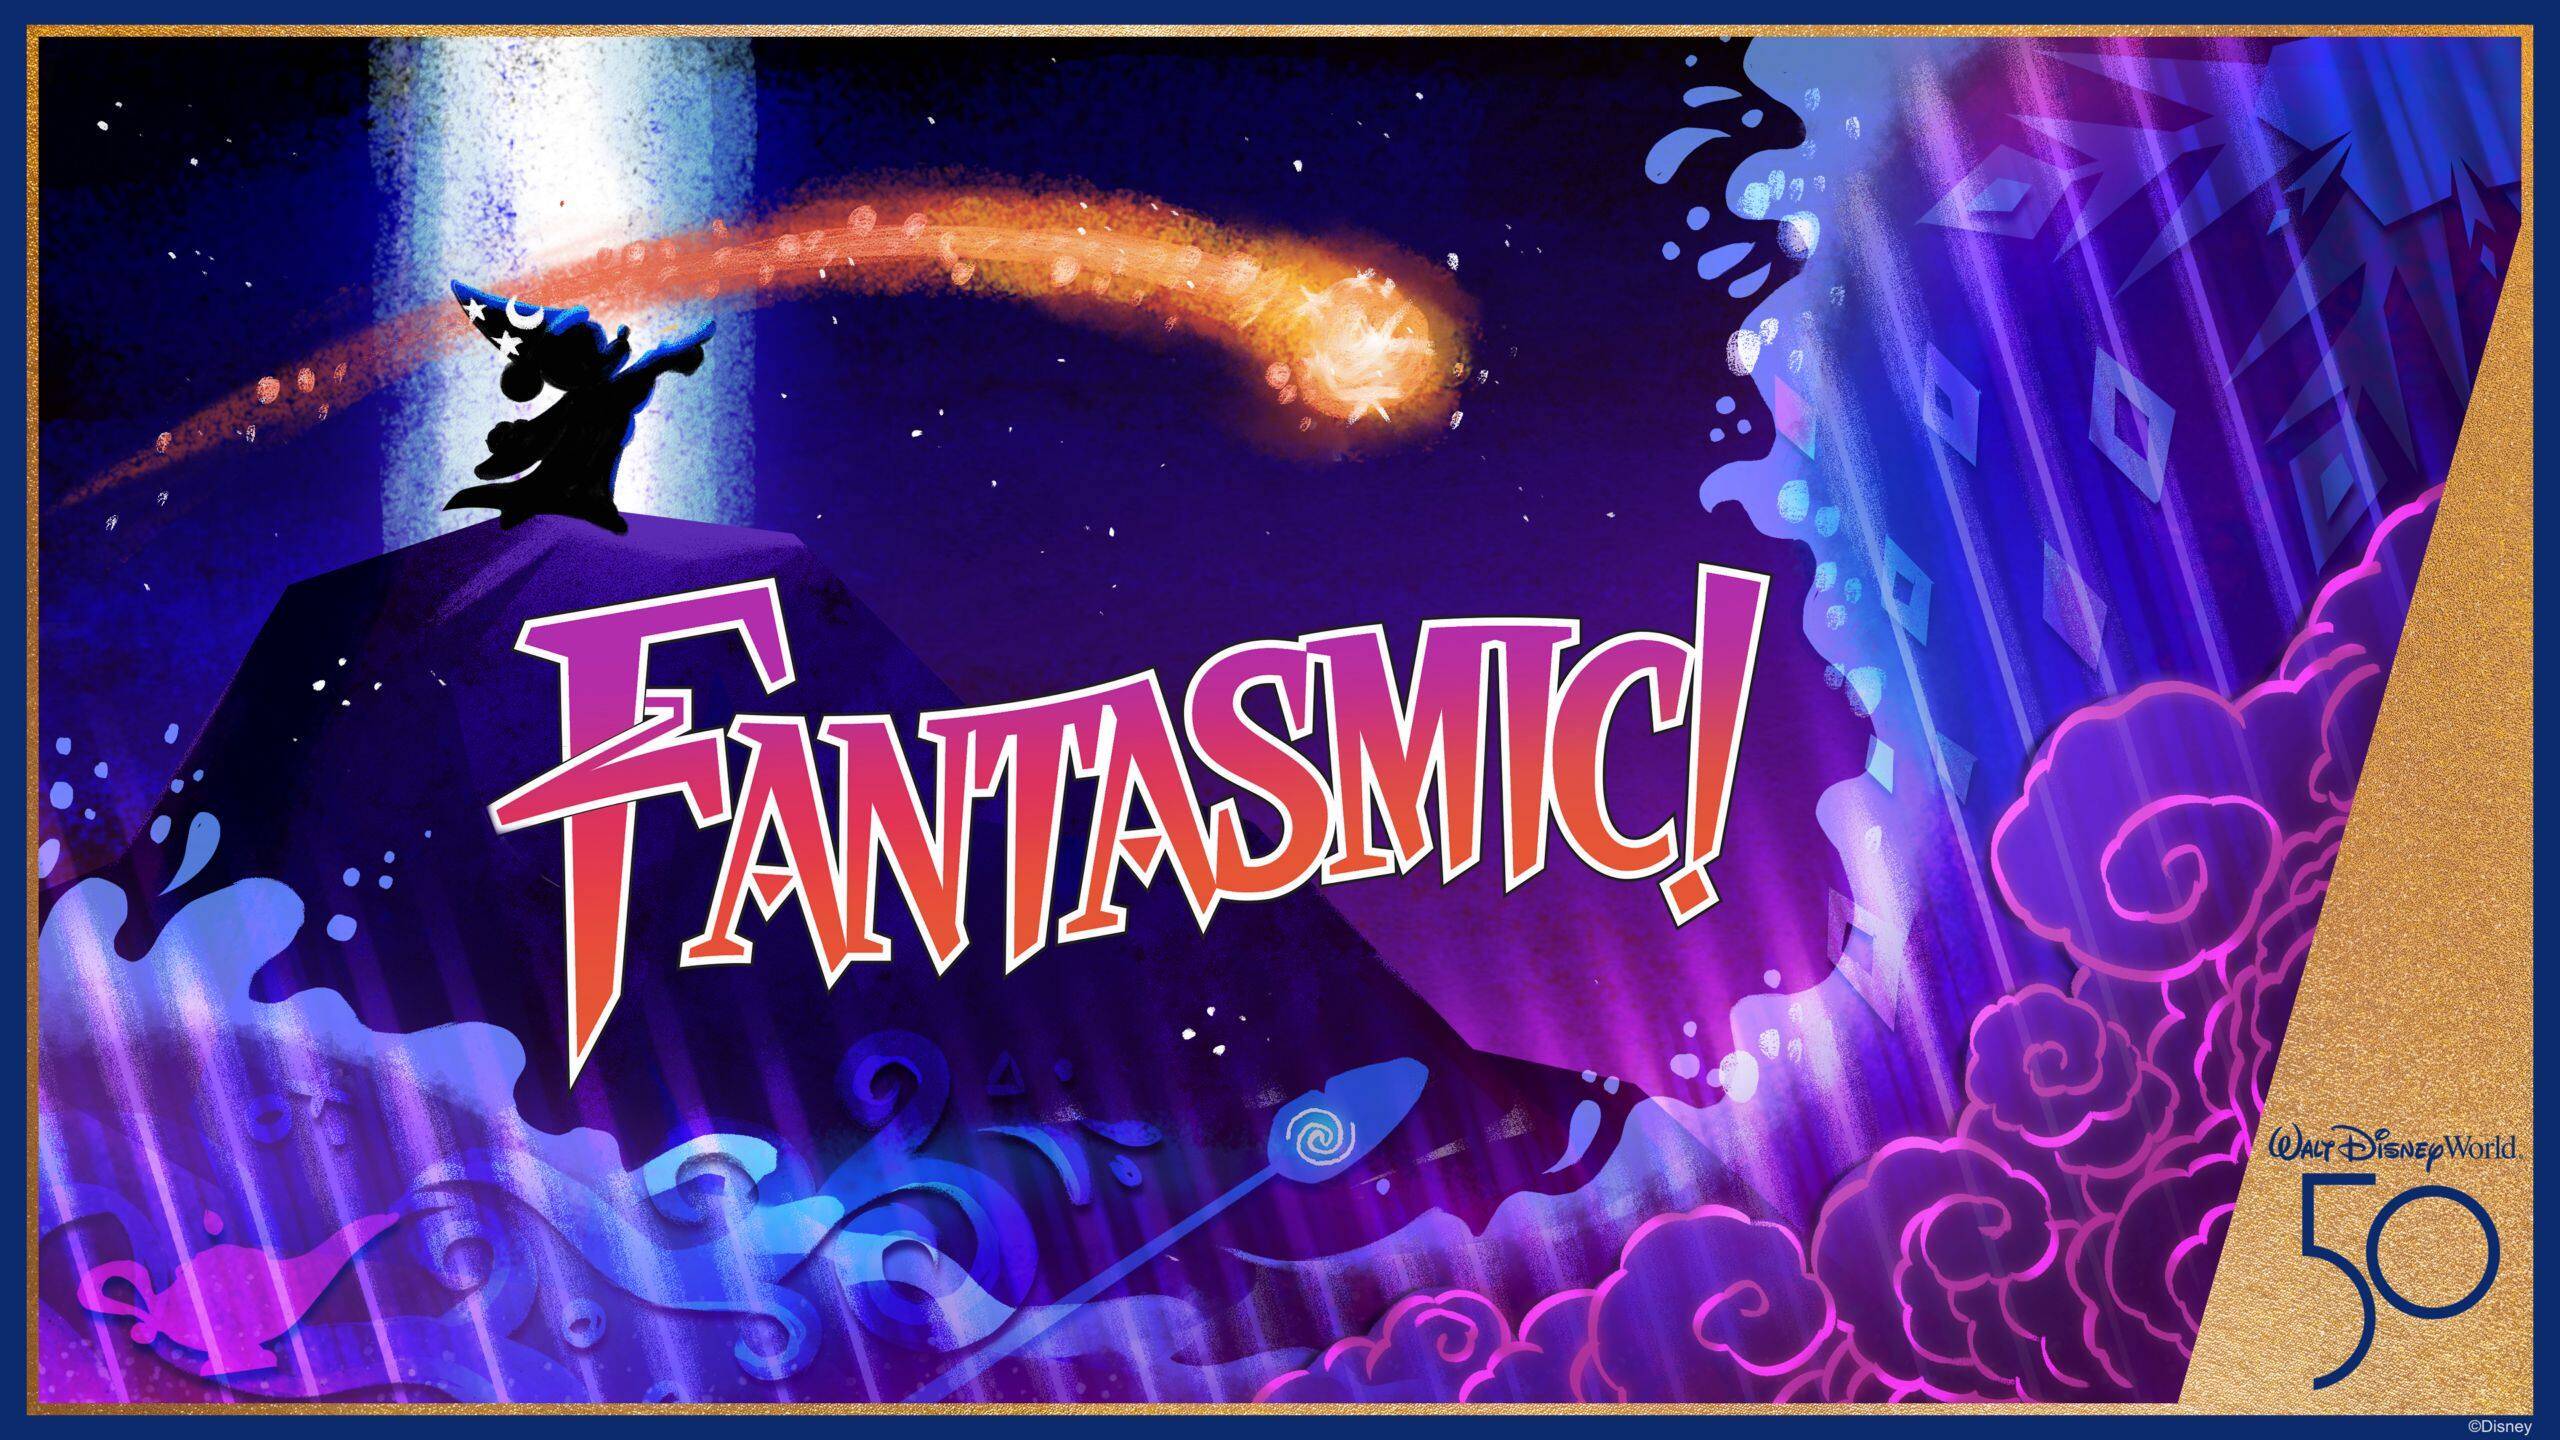 Fantasmic! Cast Member previews to take place November 1 and November 2 at Disney's Hollywood Studios